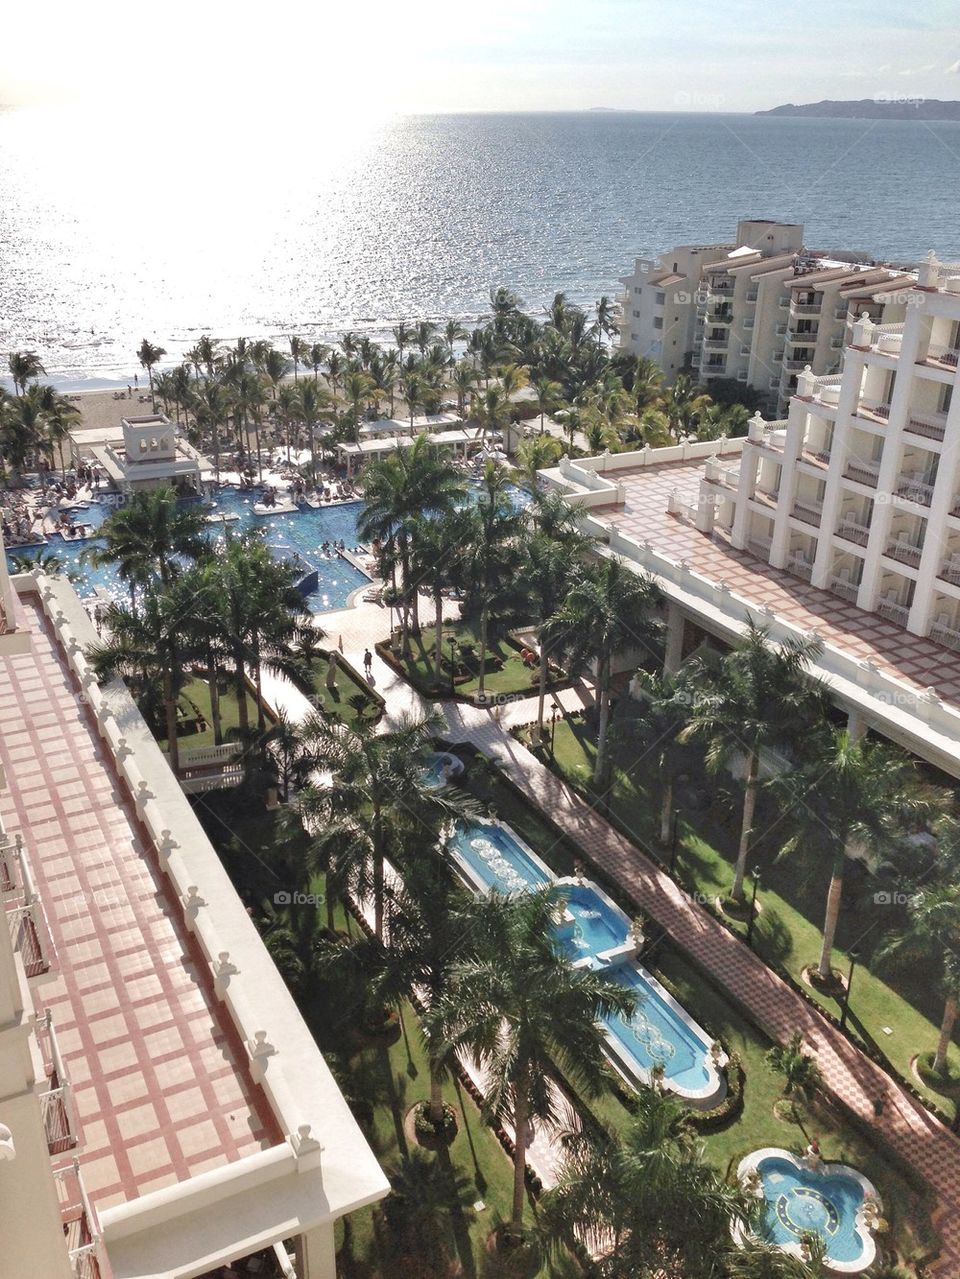 riu palace pacifico hotel nuevo vallarta mexico resort by LordHouse